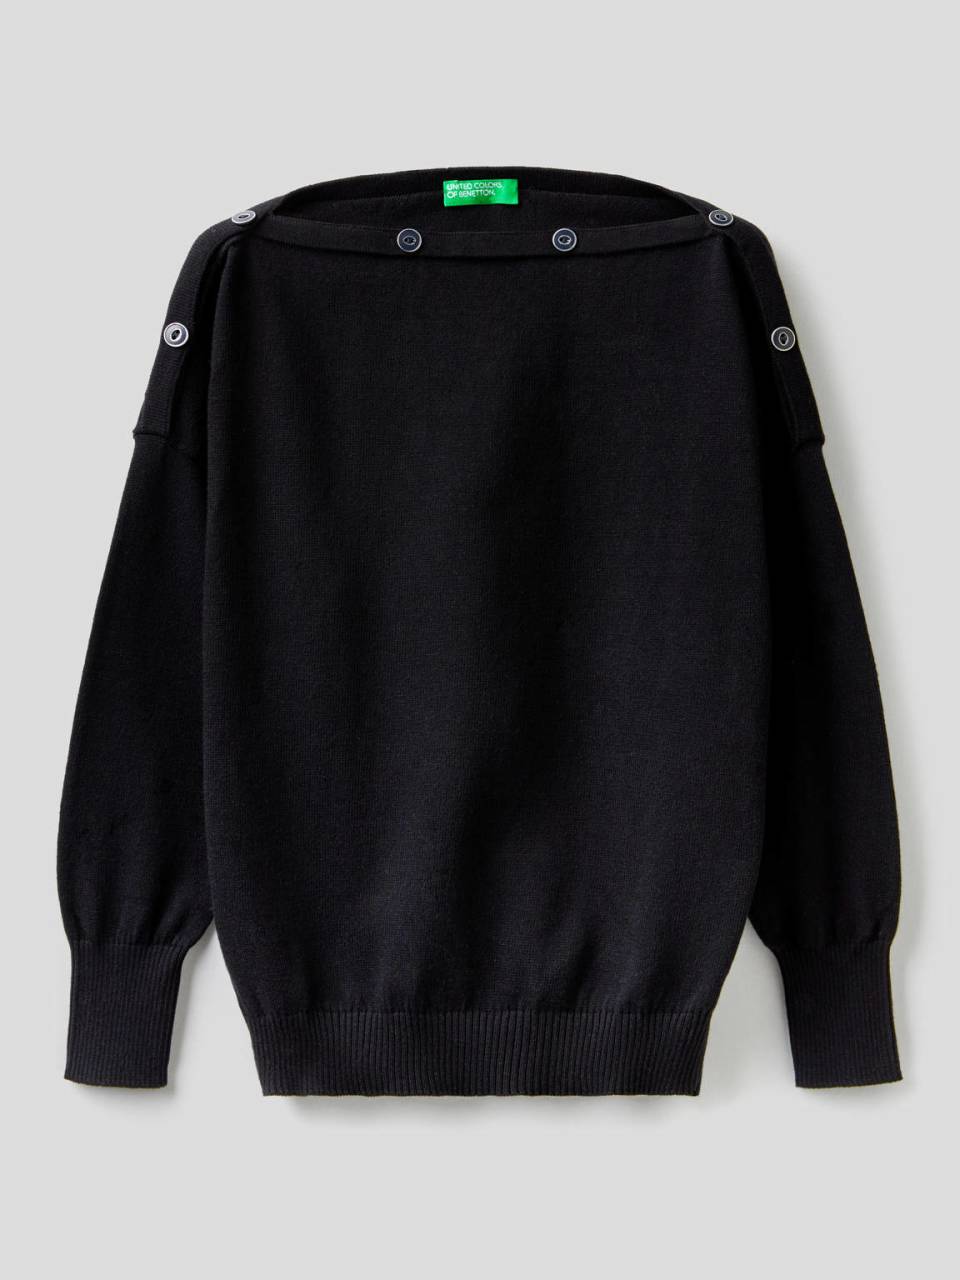 Benetton Double wear 100% cotton sweater. 1